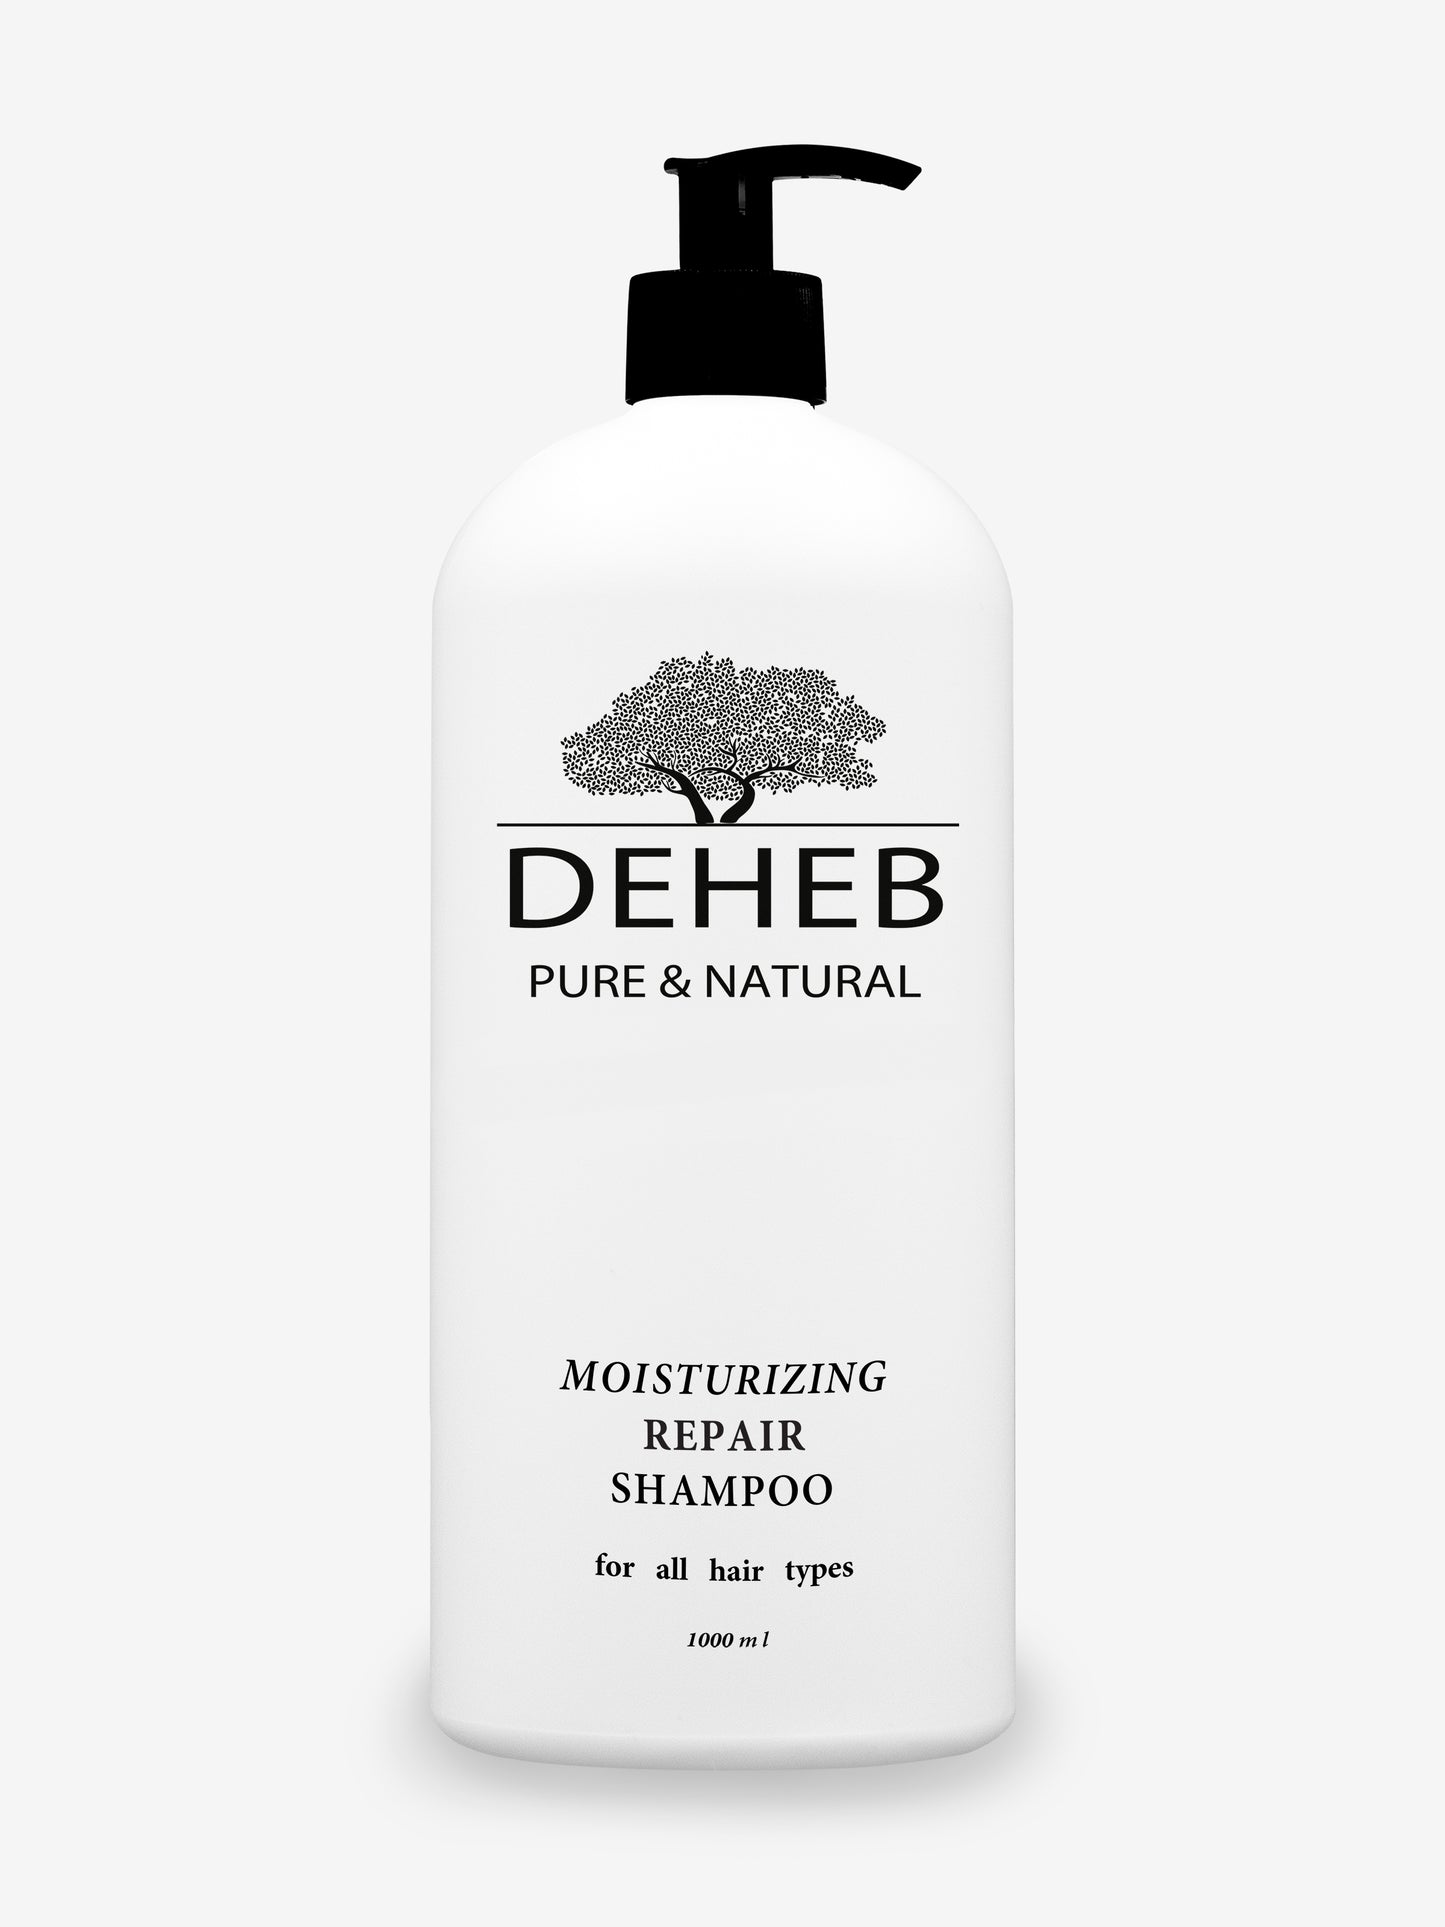 Moisturizing repair shampoo - 1000ml